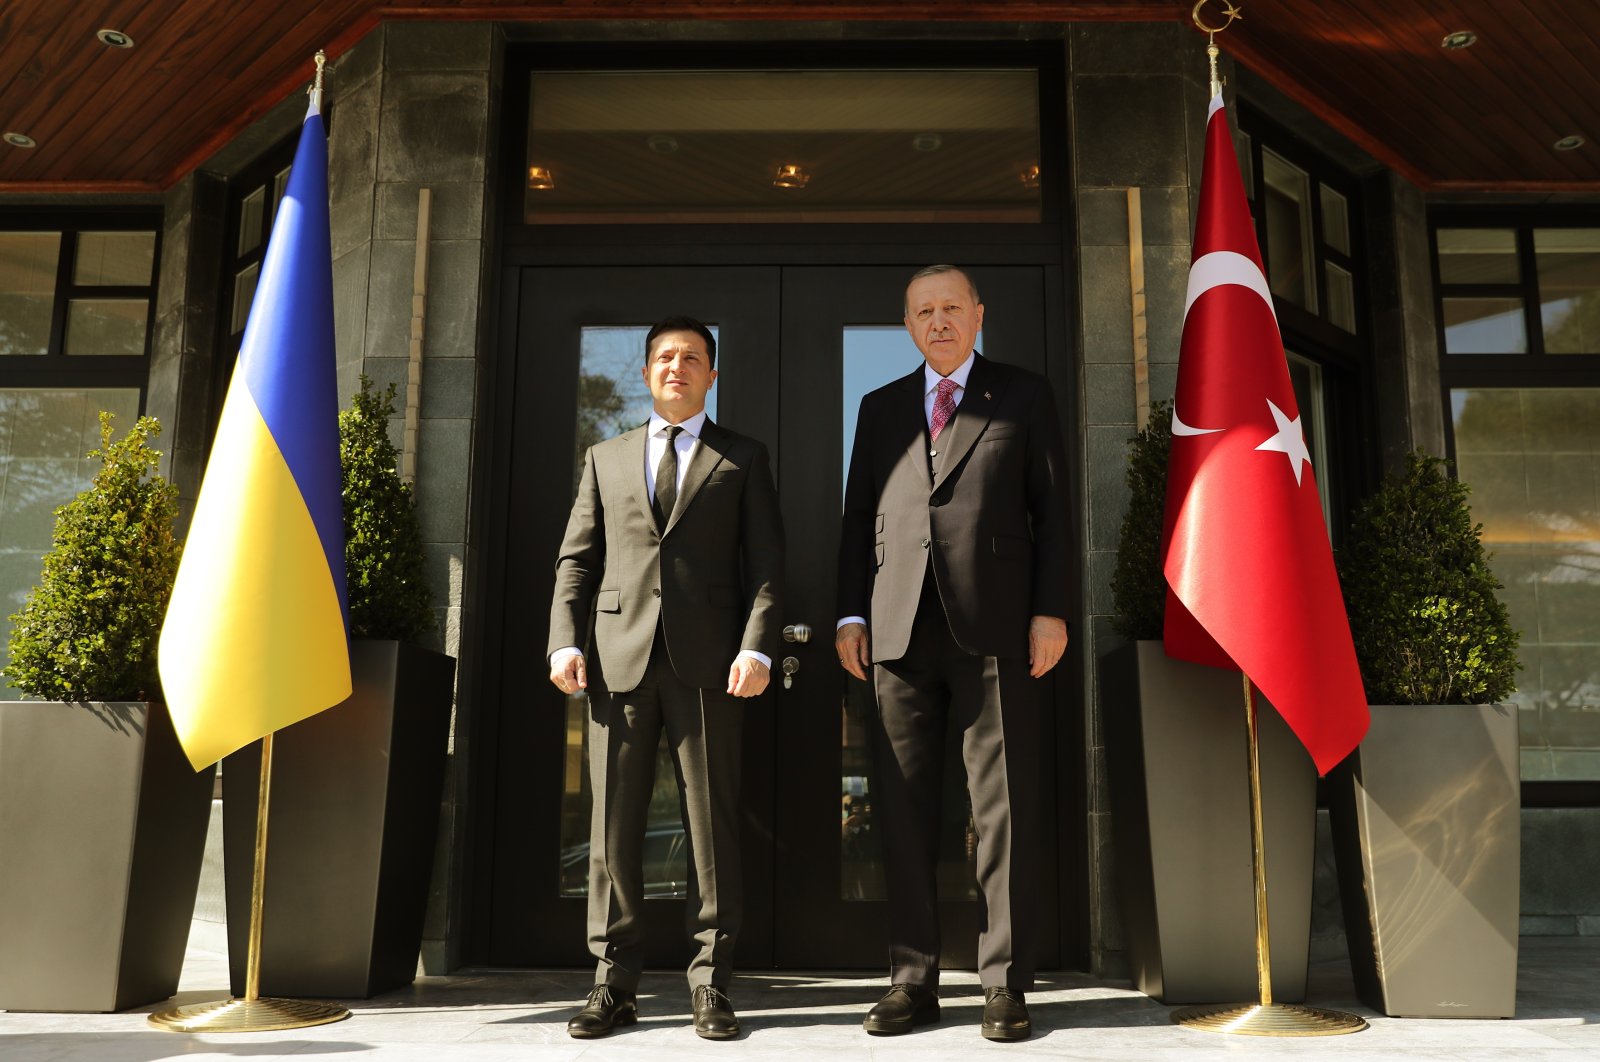 Turkey aims to make Black Sea region a basin of peace: Erdoğan